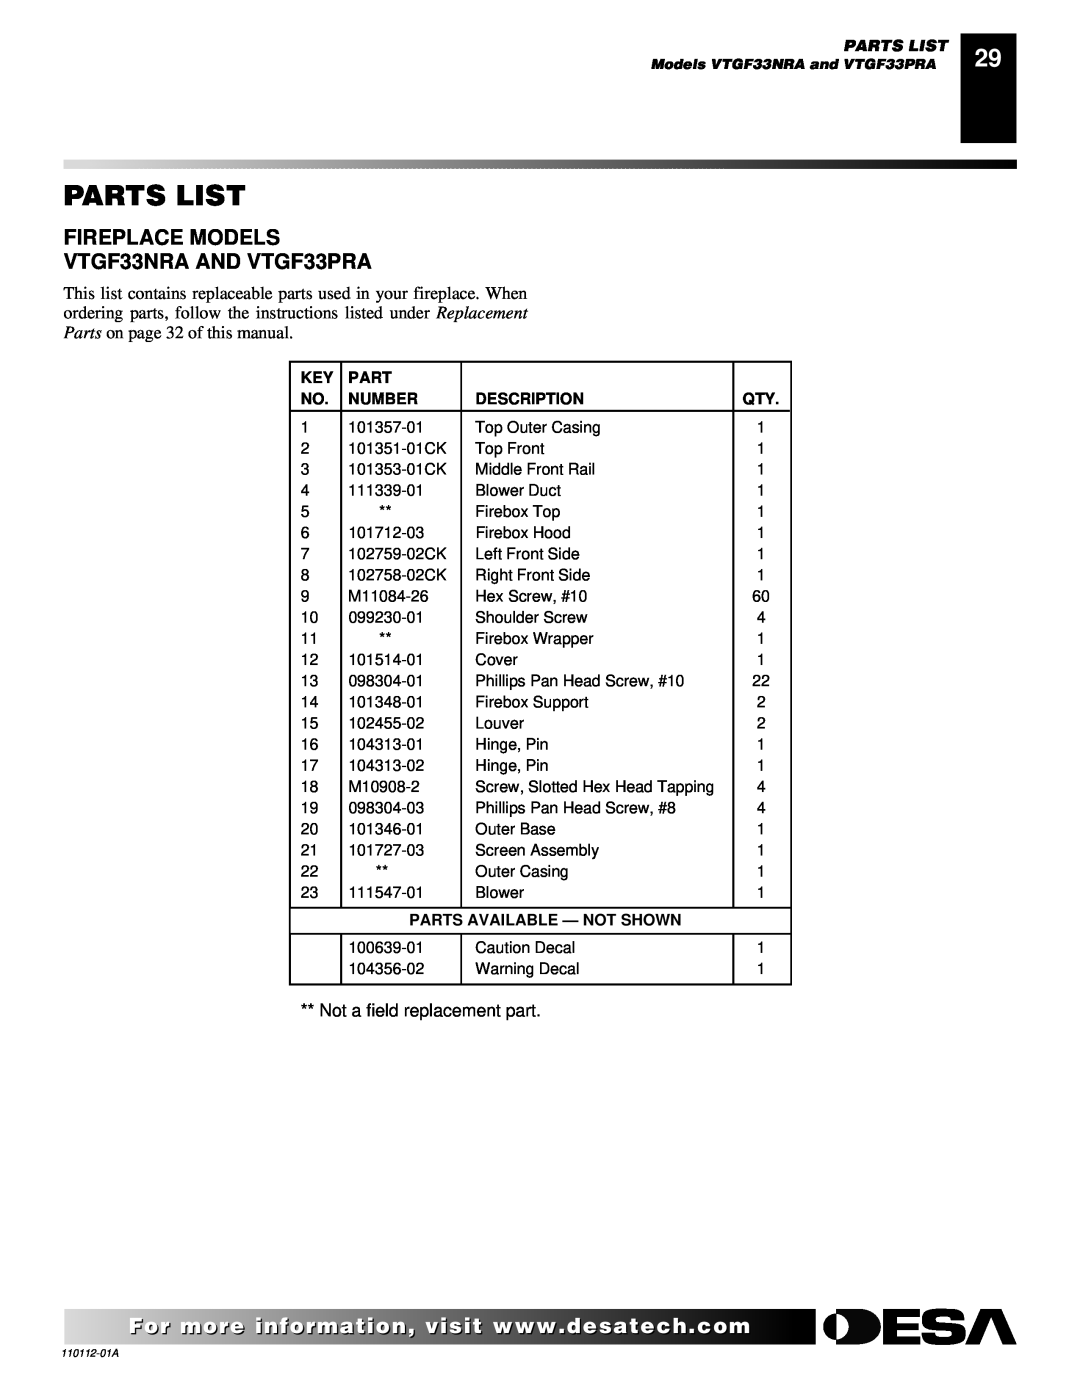 Desa Parts List, FIREPLACE MODELS VTGF33NRA AND VTGF33PRA, Not a field replacement part, Number, Description 